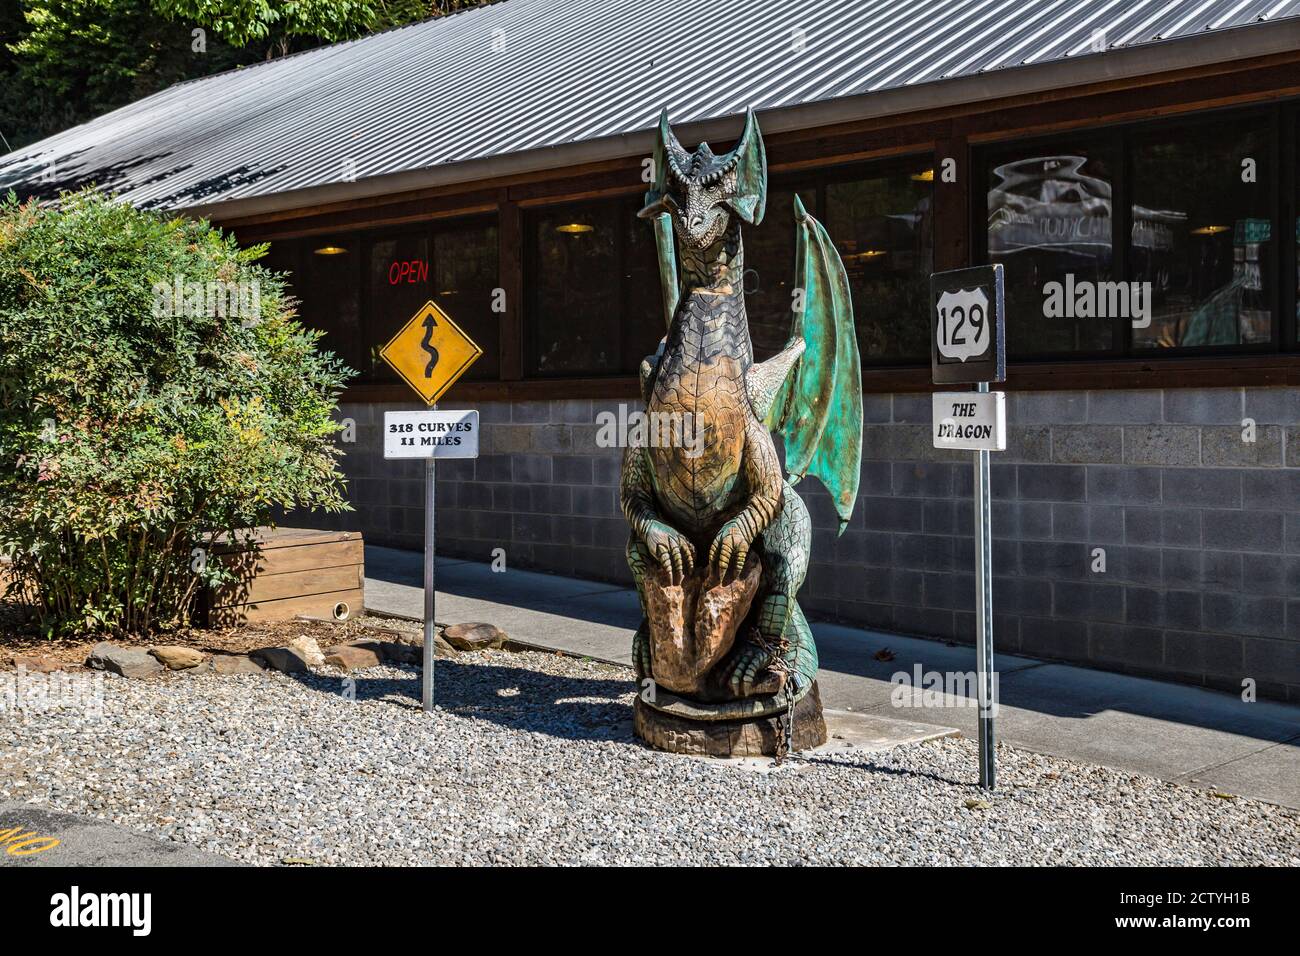 Carved dragon statue at the Deals Gap Motorcycle Resort along the Tail of the Dragon at Deals Gap, North Carolina, USA Stock Photo